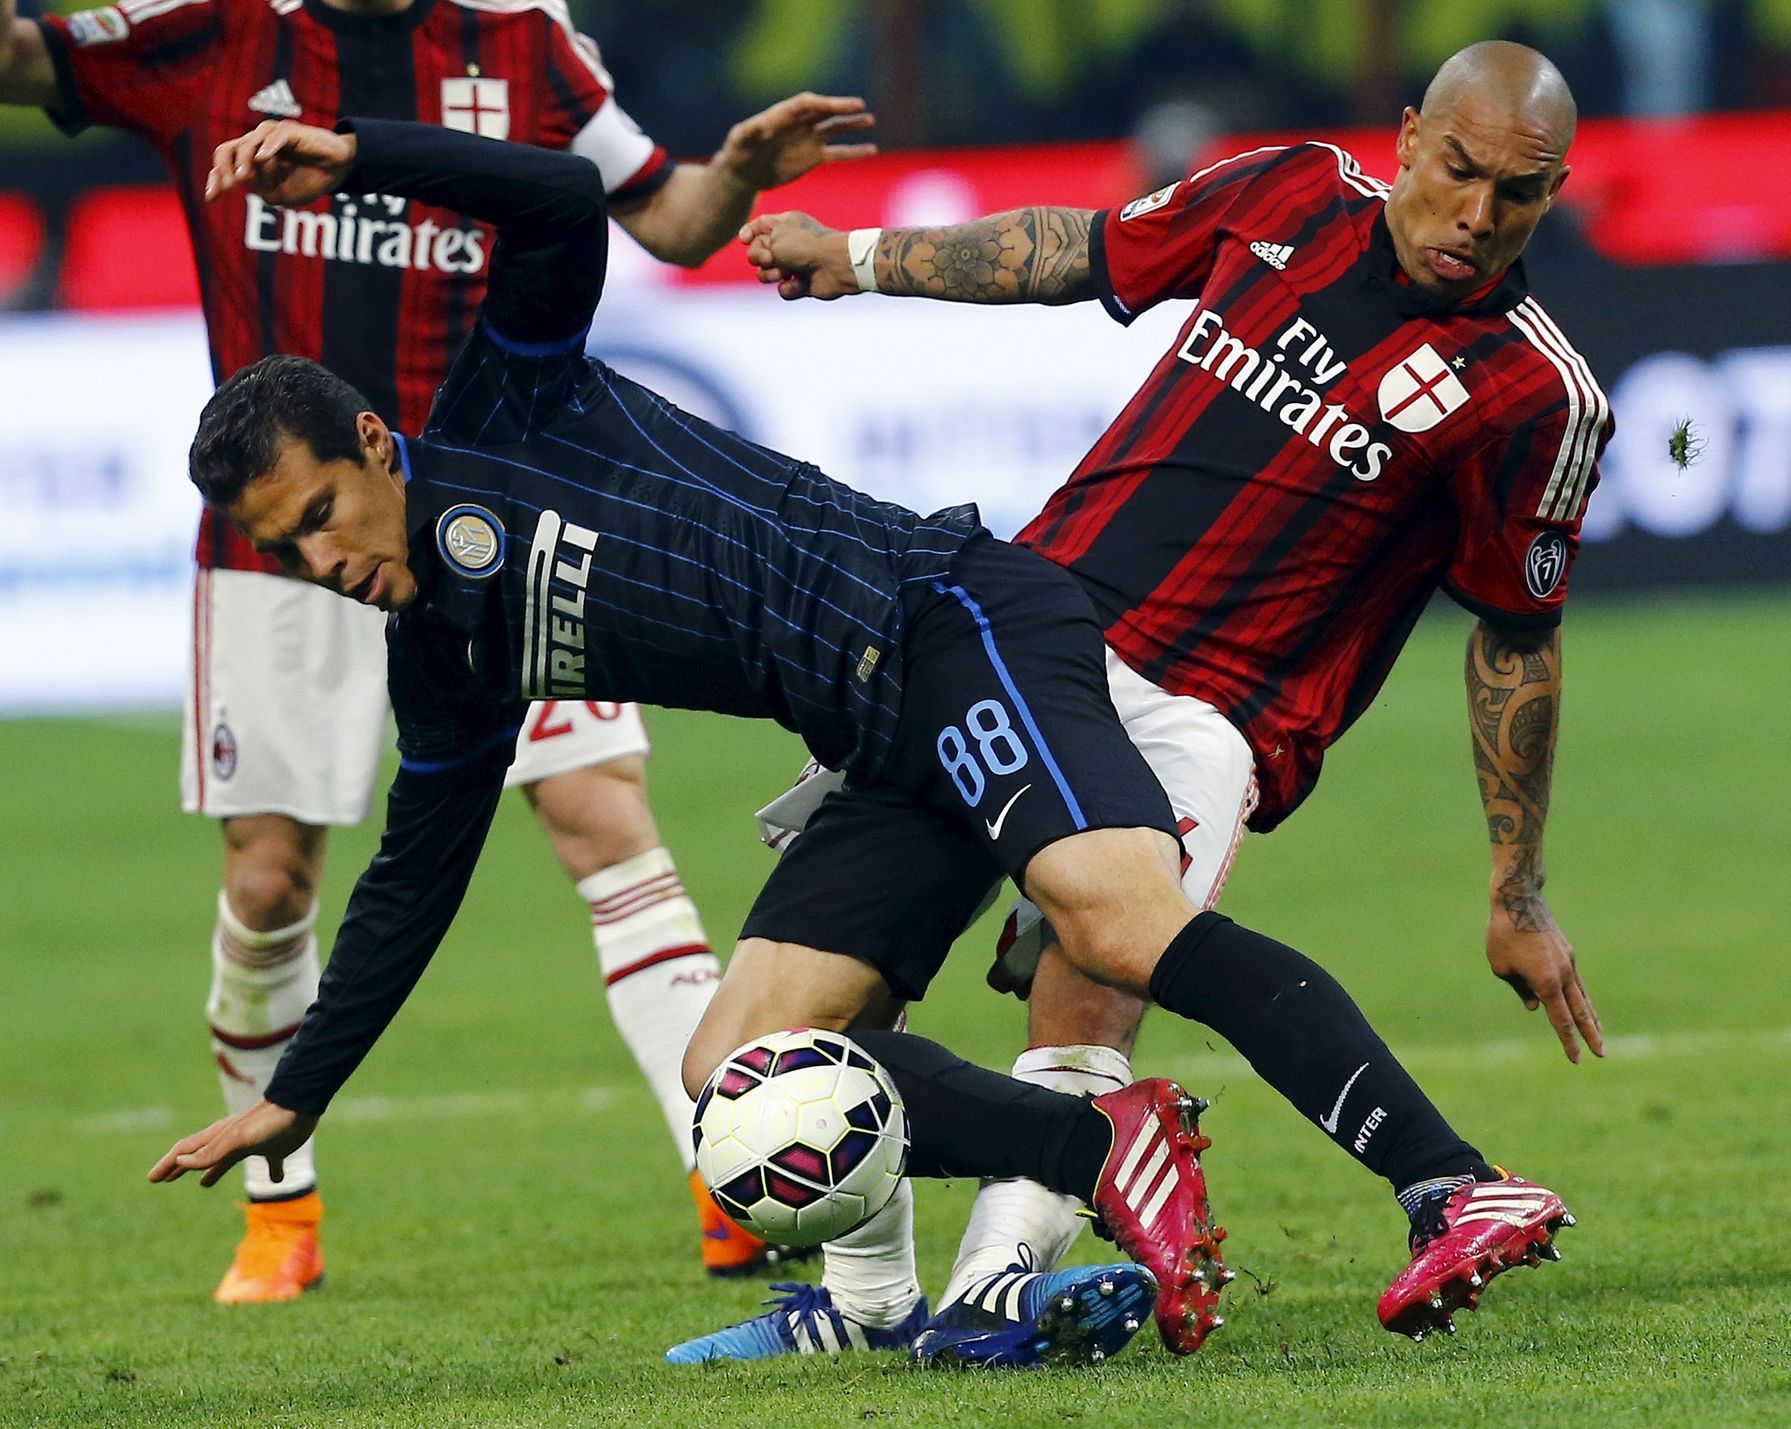 AC Milan's De Jong challenges Inter Milan's Hernanes during their Serie A soccer match at the San Siro stadium in Milan